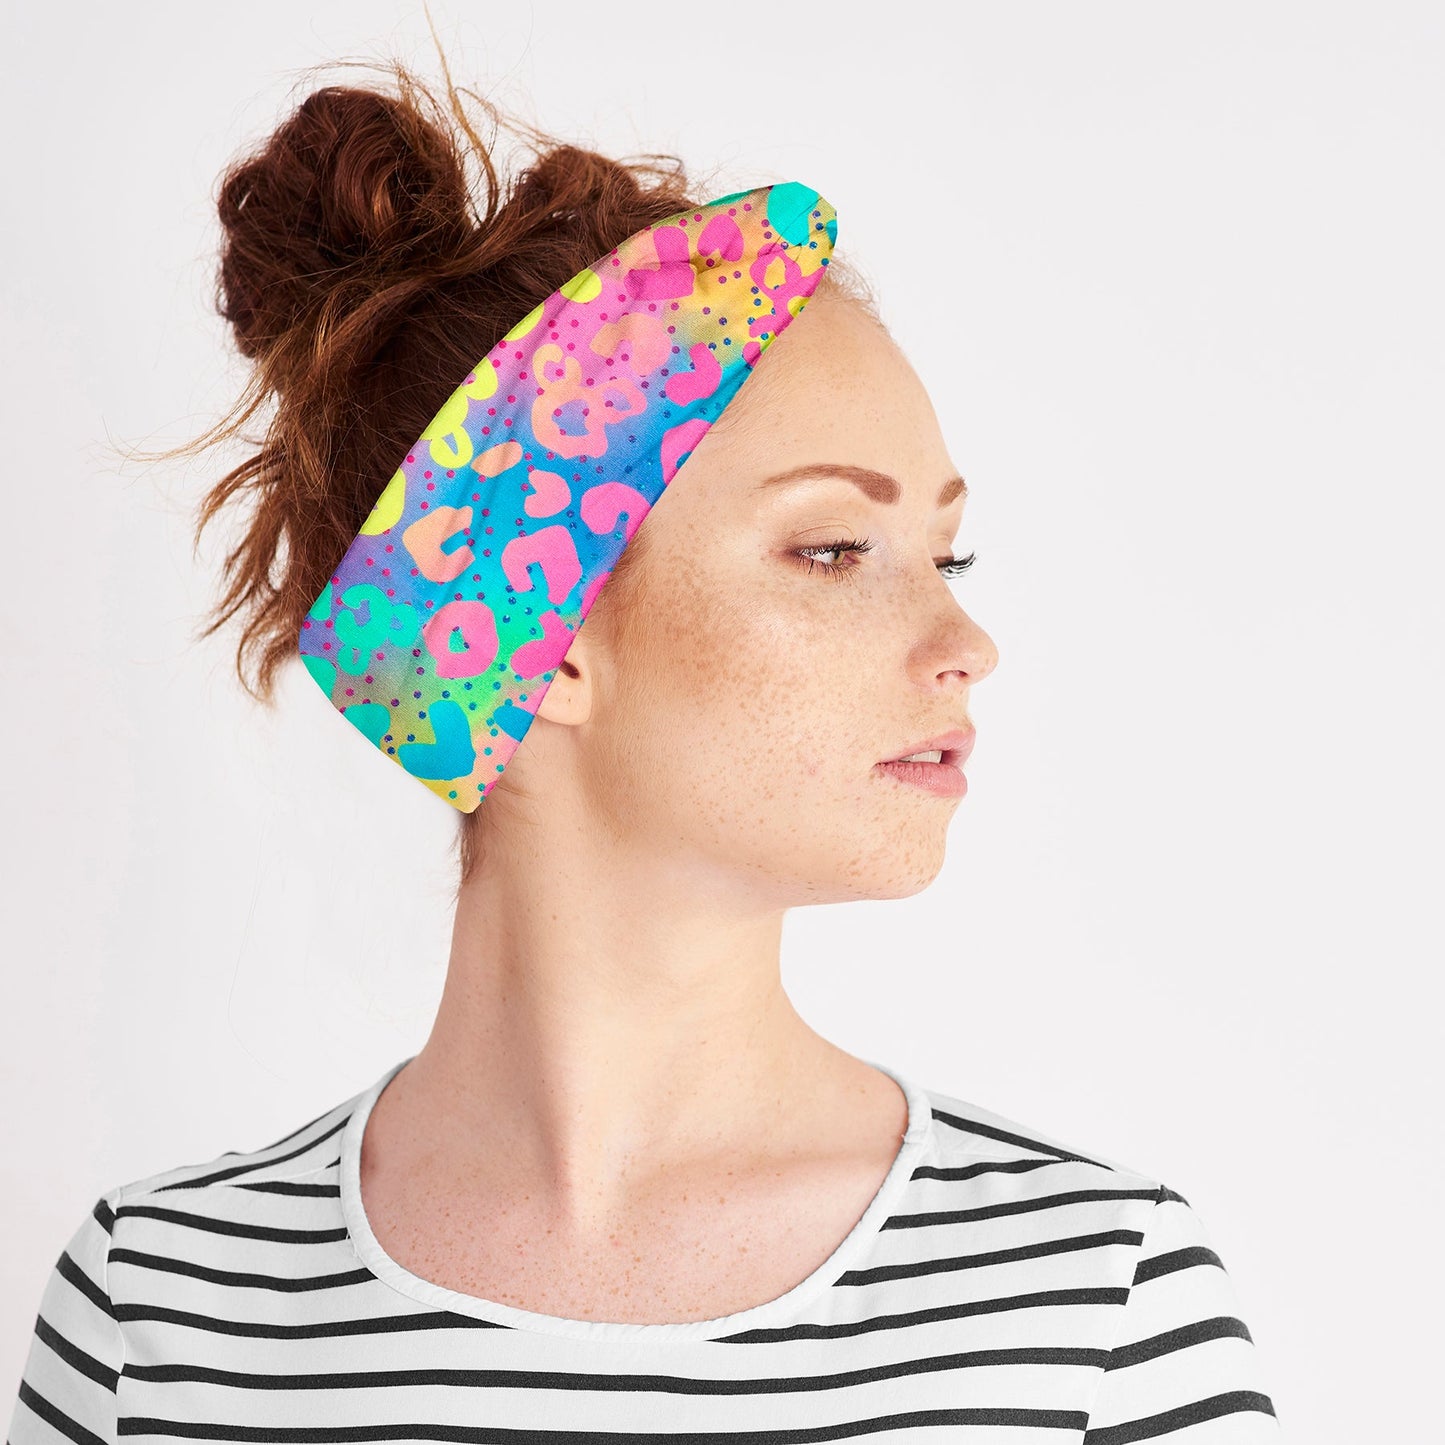 Rainbow Cheetah Knit Fabric Twist Headband